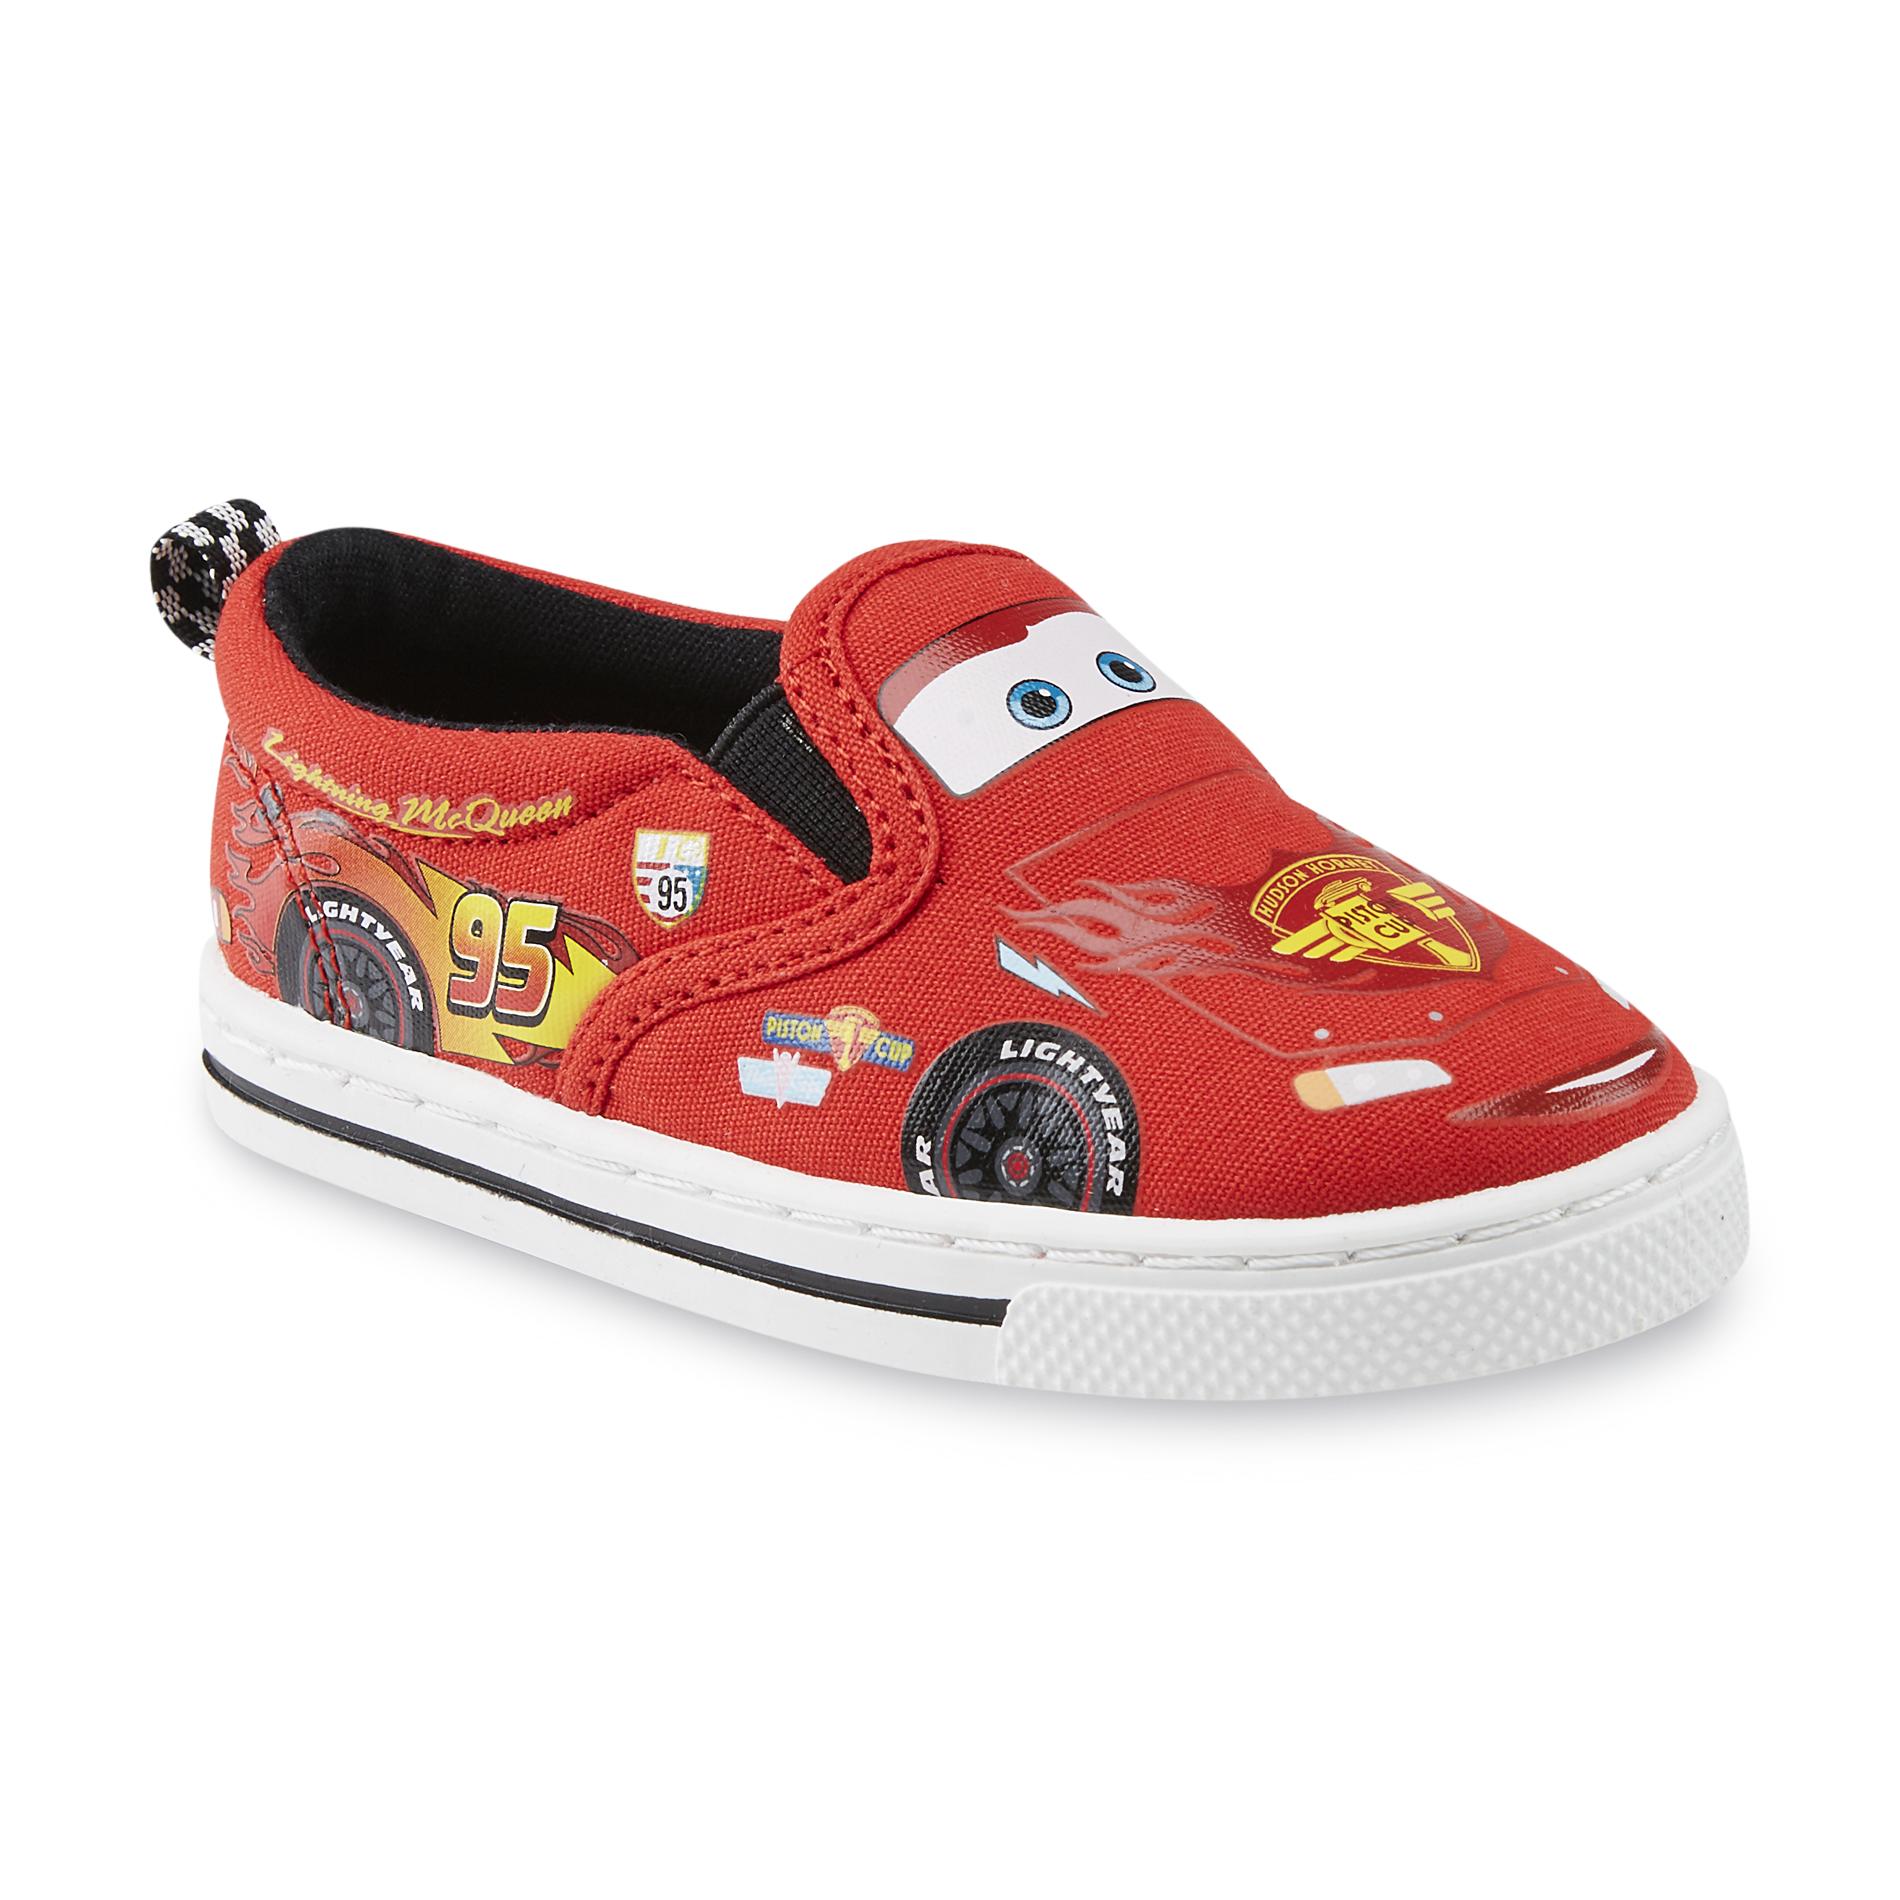 Disney Toddler Boy's Cars Lightning McQueen Red Canvas Shoe